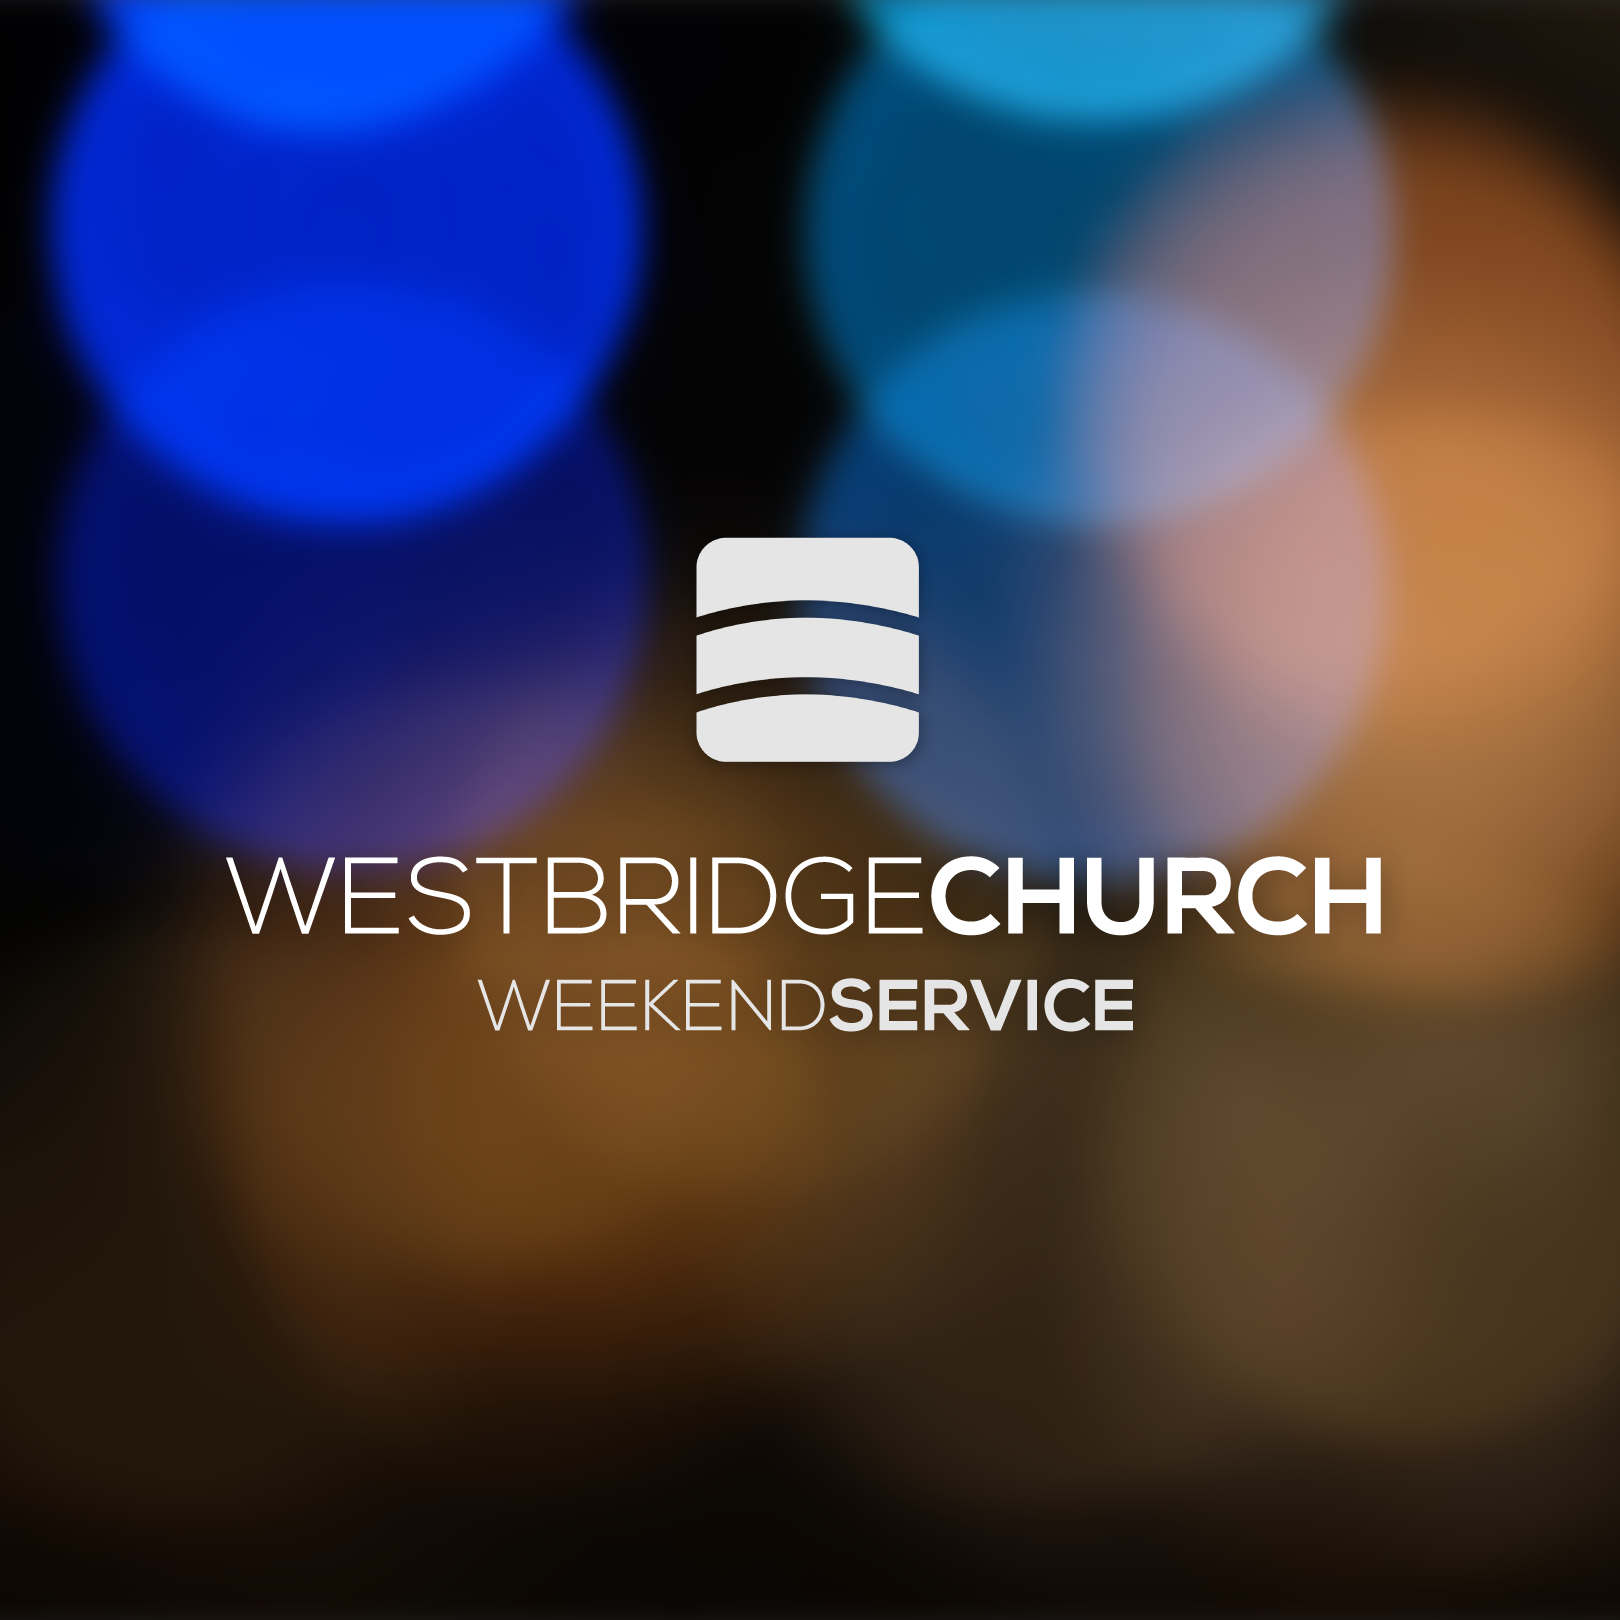 Westbridge Church Weekend Service